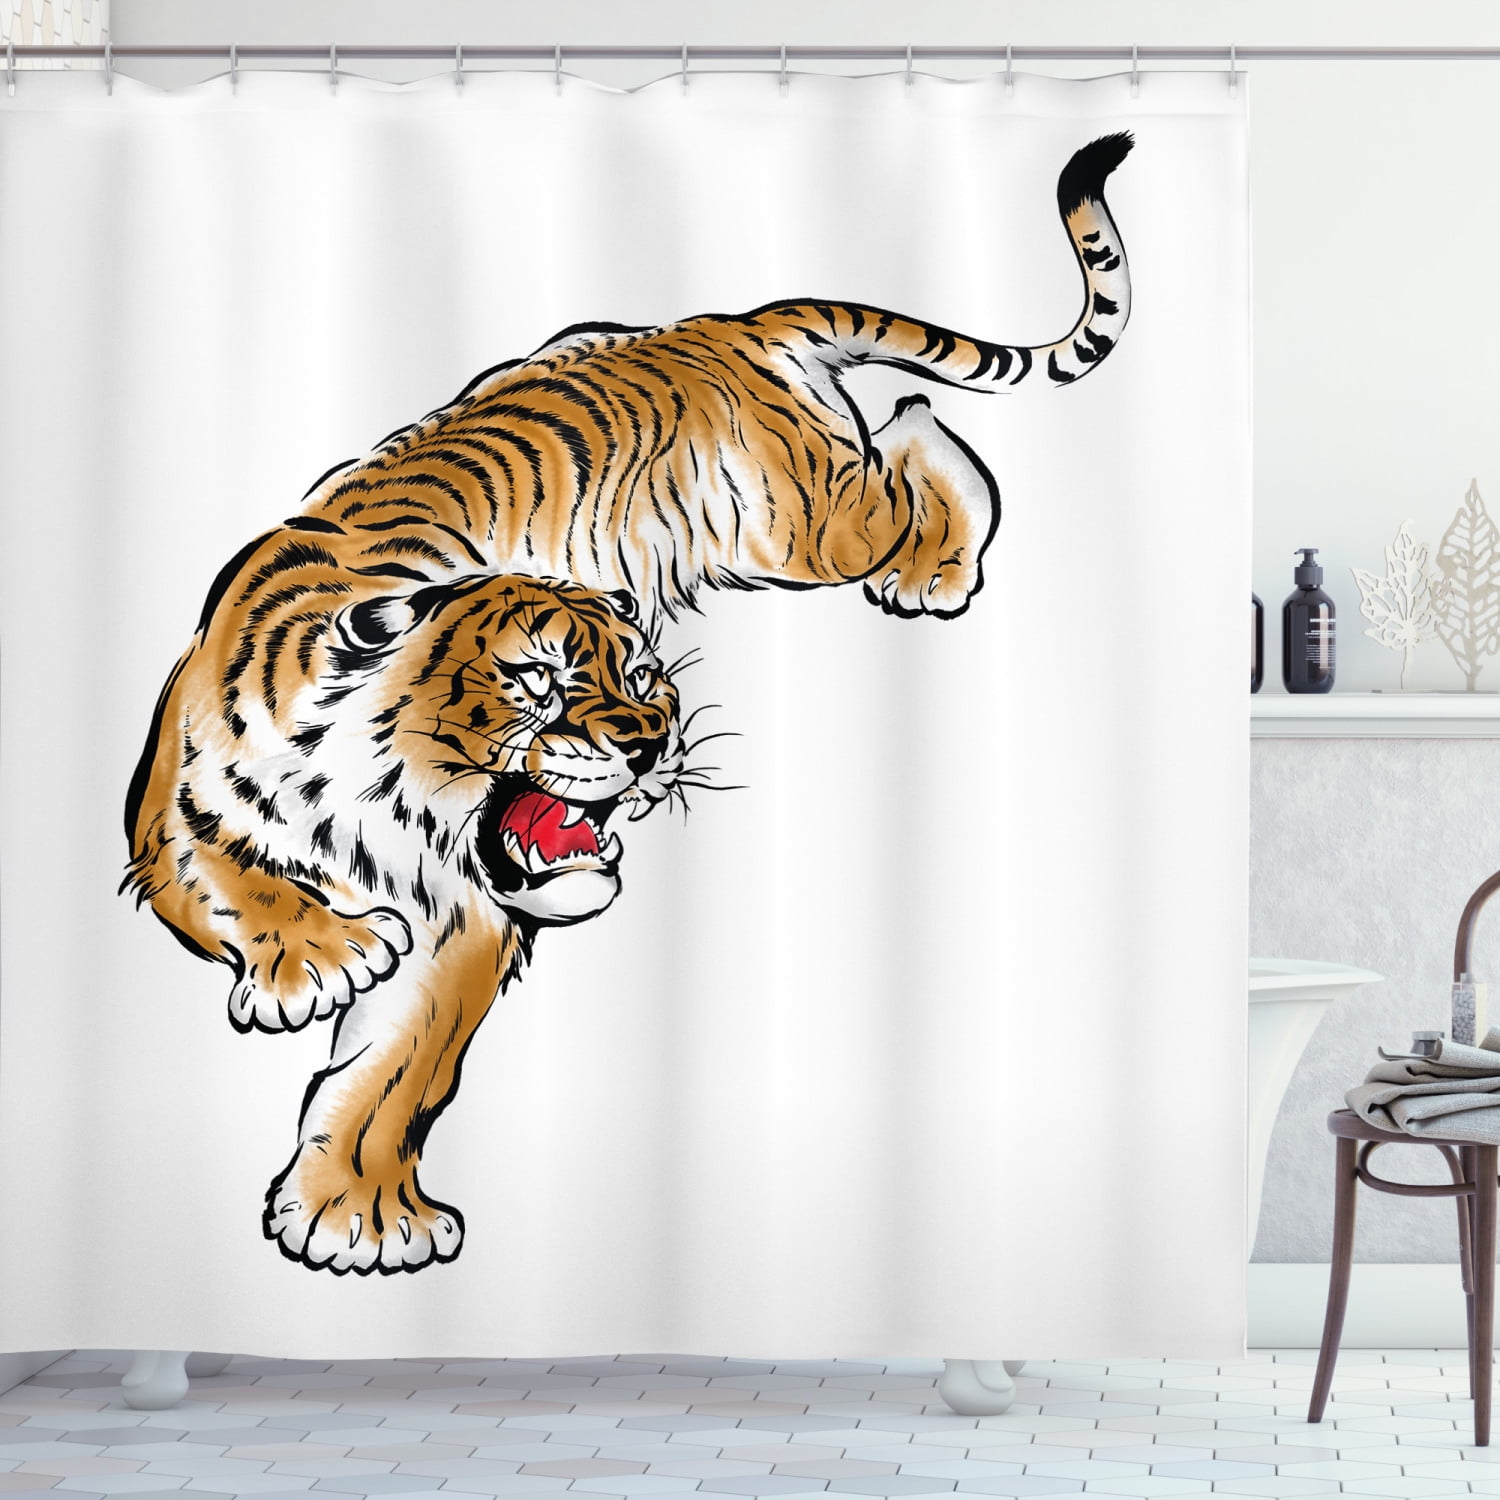 Details about   Tiger Shower Curtain Monochrome Feline Leaves Print for Bathroom 